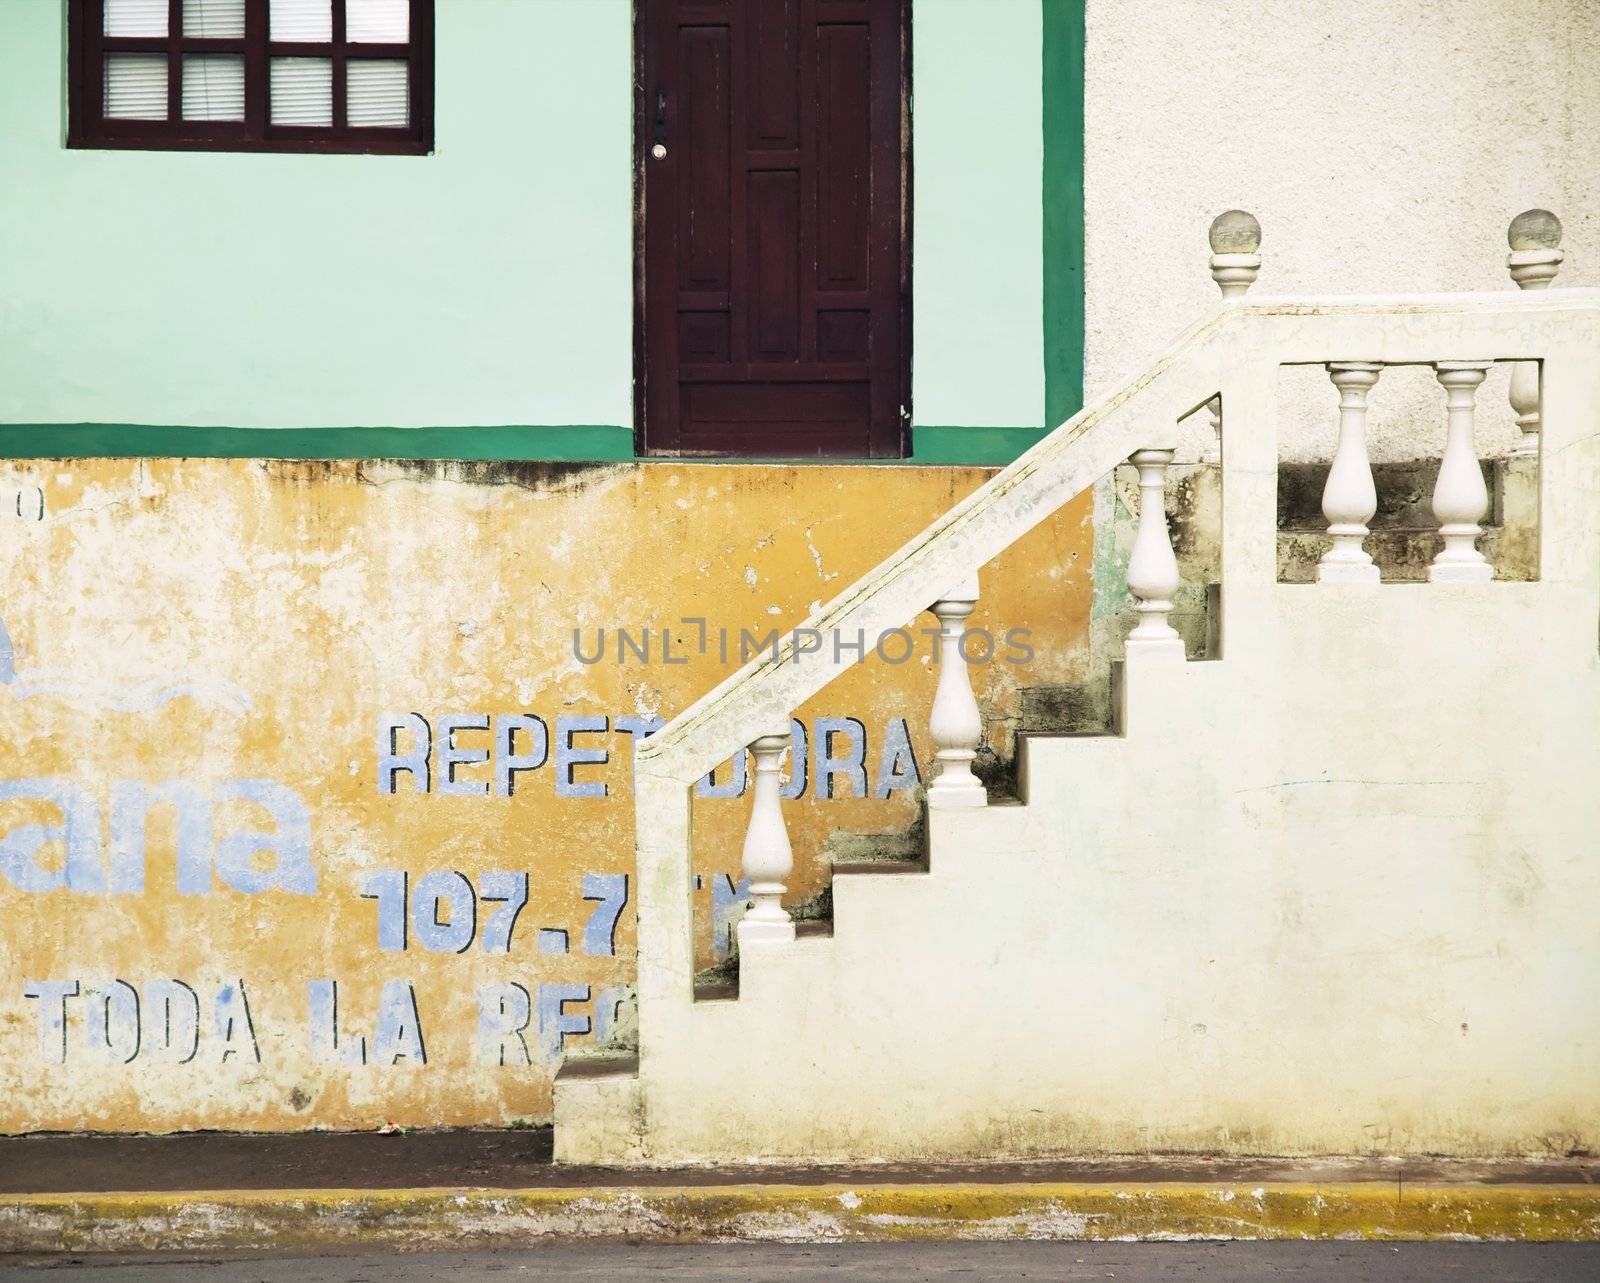 Street Detail from Granada Nicaragua by Creatista